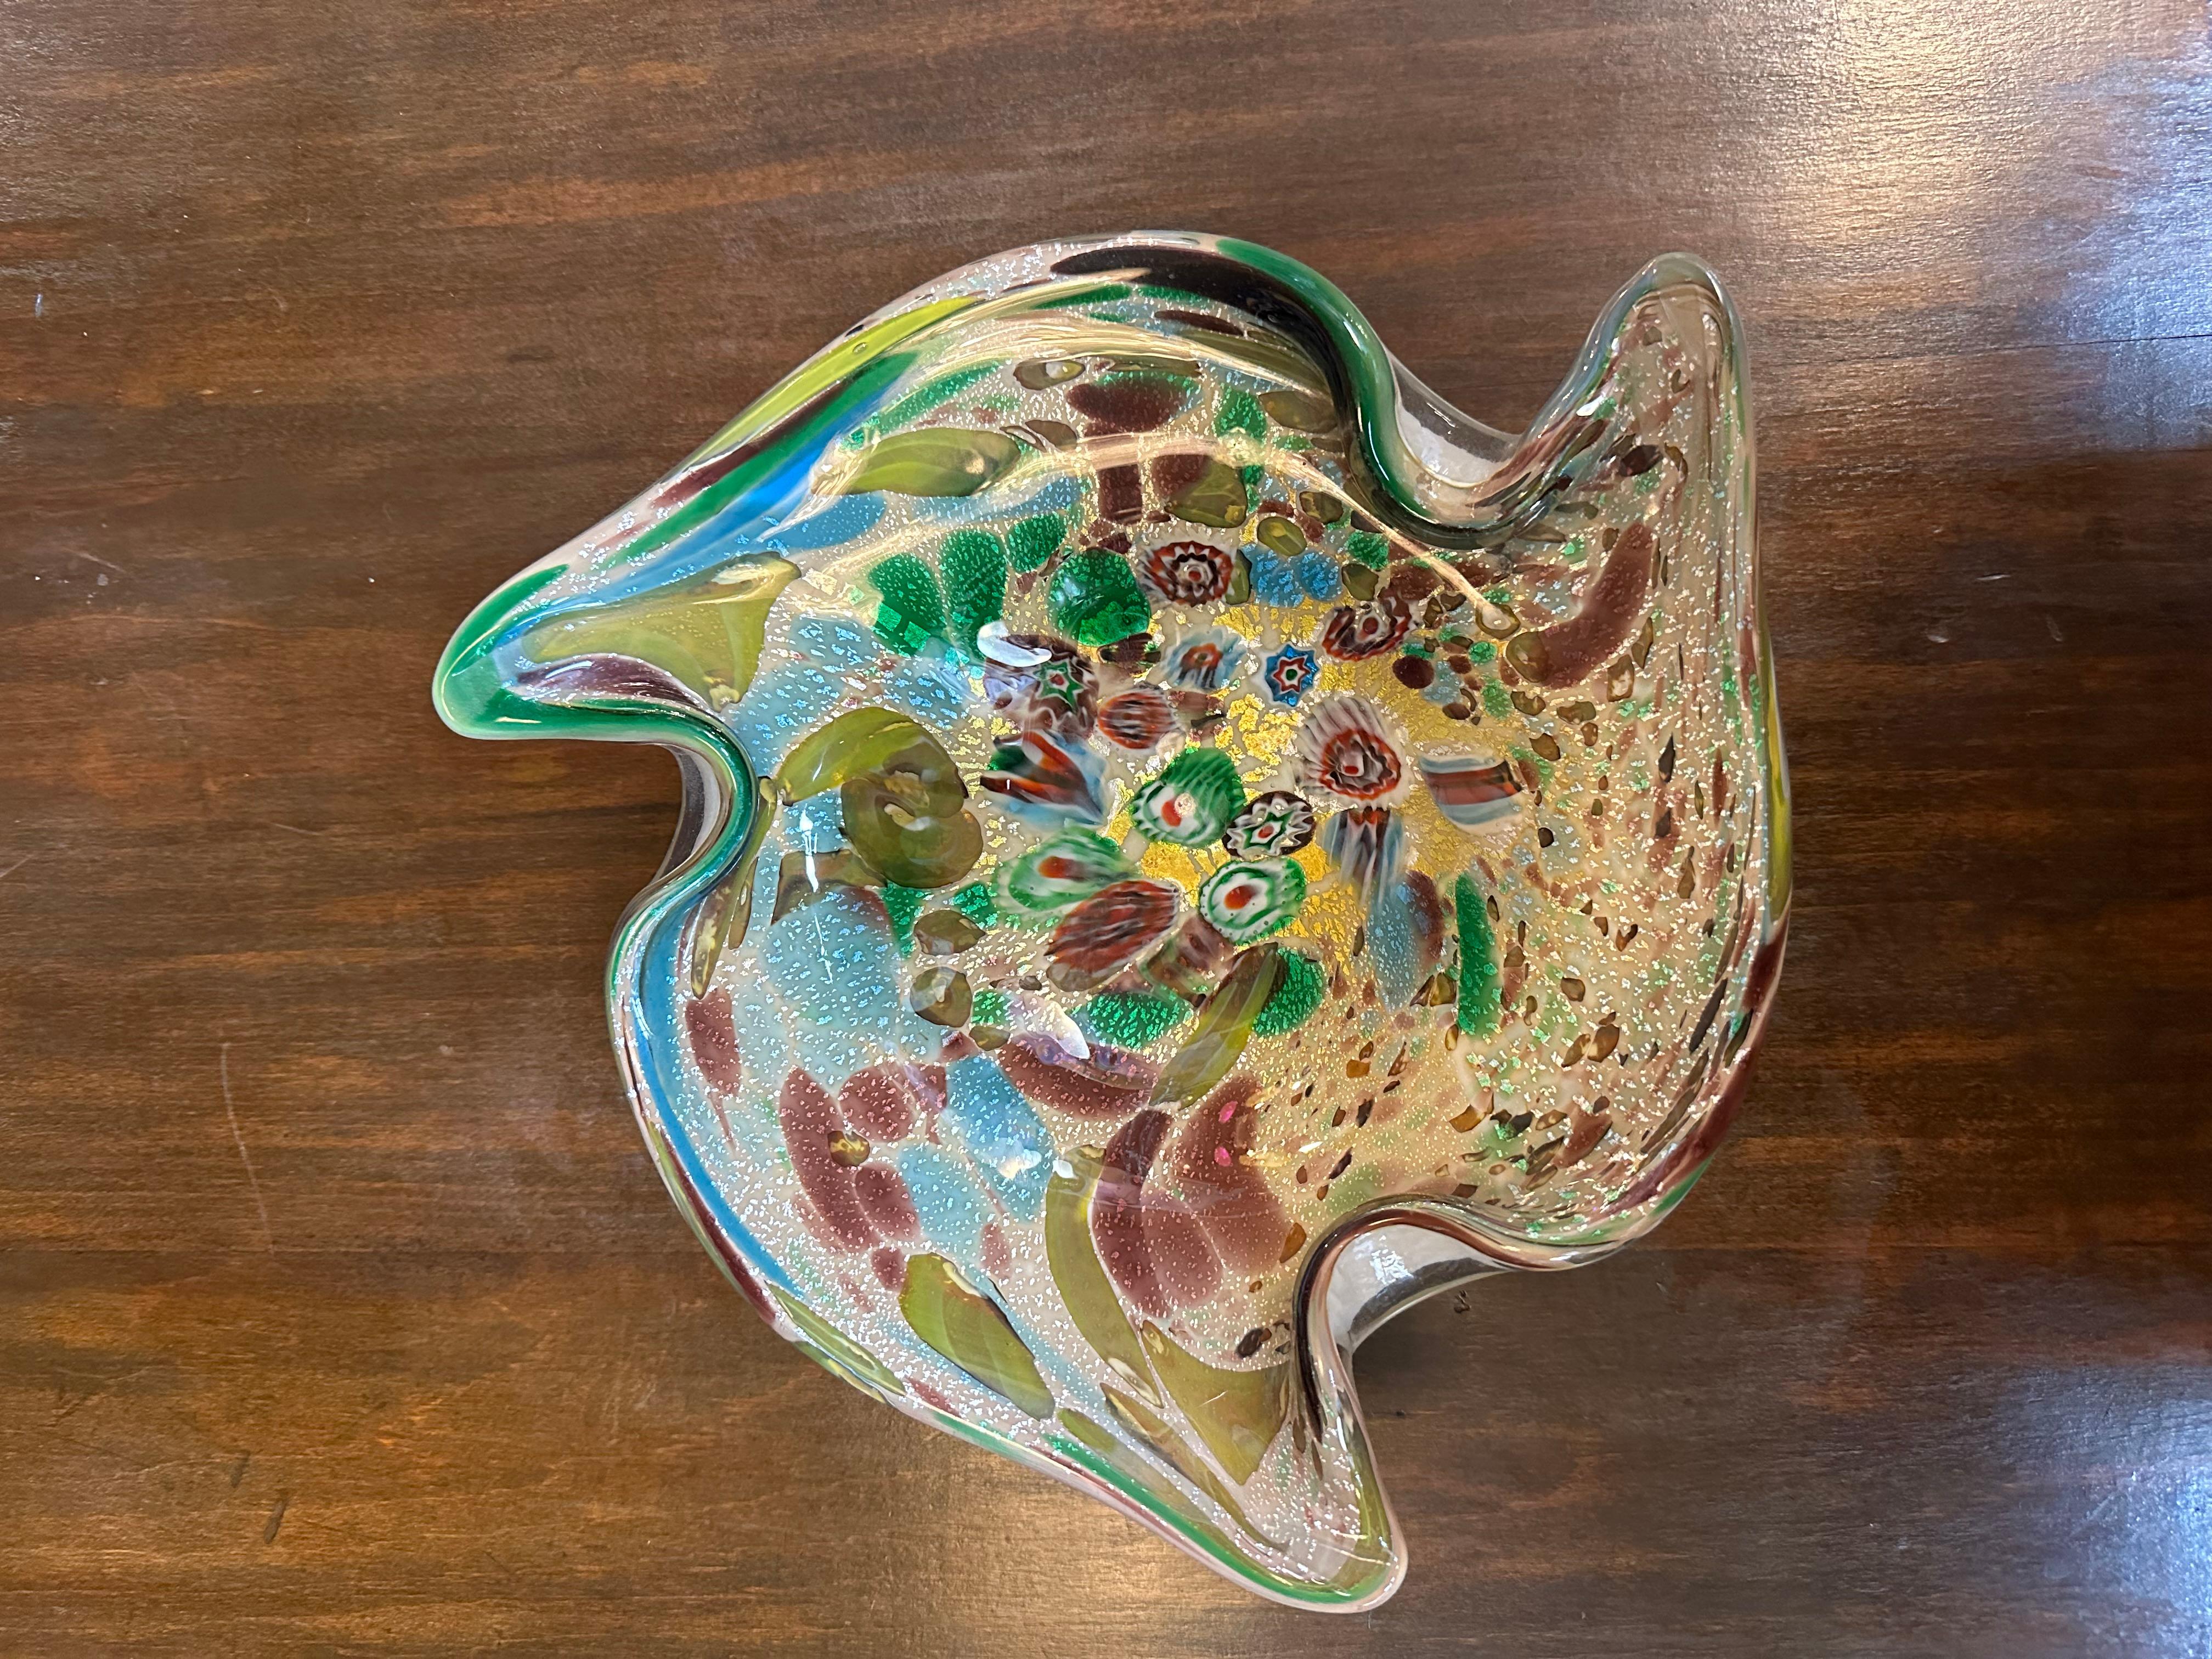 Mid-Century Modern Murano Italian Art Glass Ashtray Bowl

Unusual Murano glass bowl with swirls colors. White underside and interesting organic shape.

circa 1960

H 2.5”
D 10”.